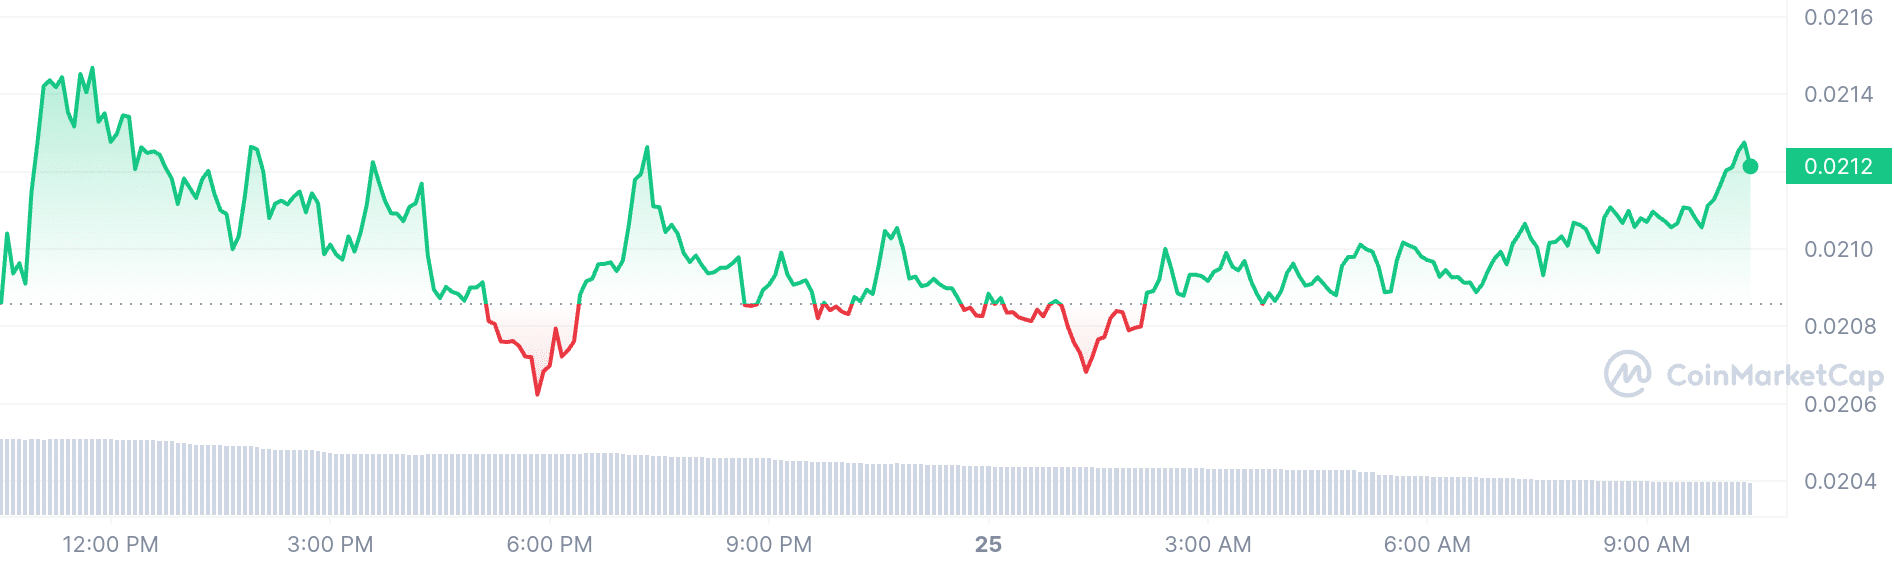 JasmyCoin price chart